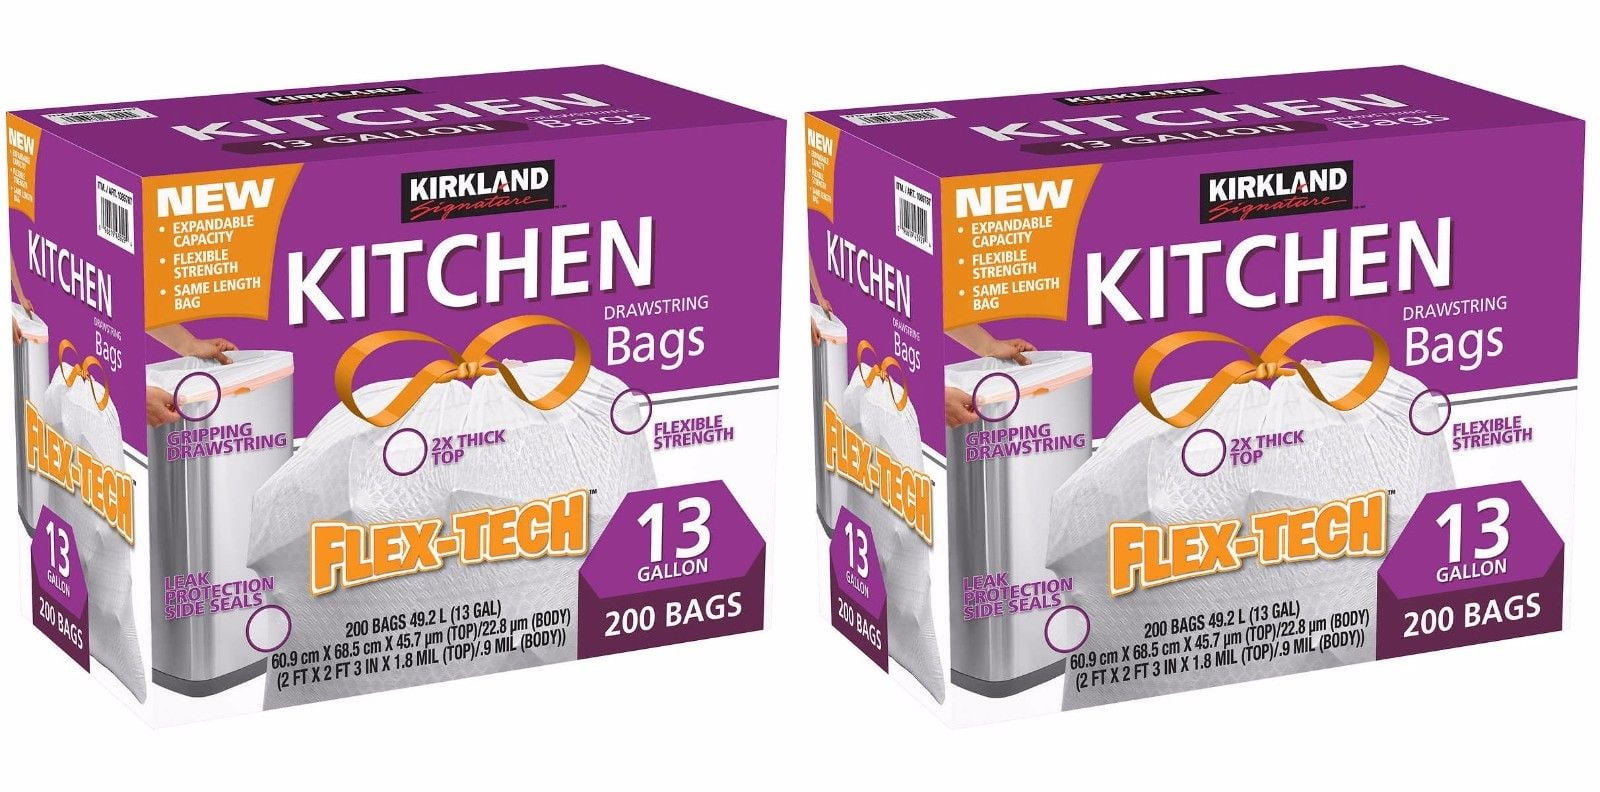 New Kirkland Signature Flex Tech Drawstring Kitchen Trash Bags 13 Gallon 200 ct 